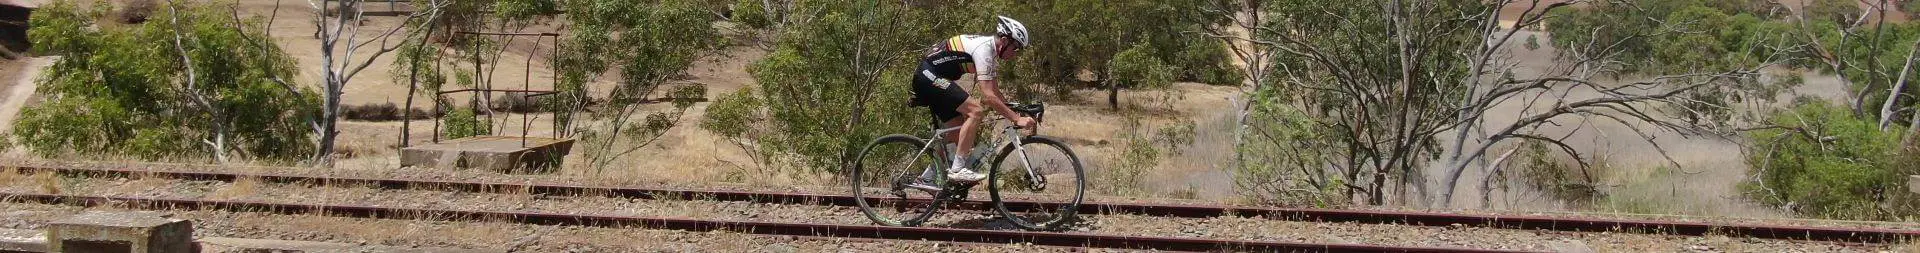 gravel cyclist